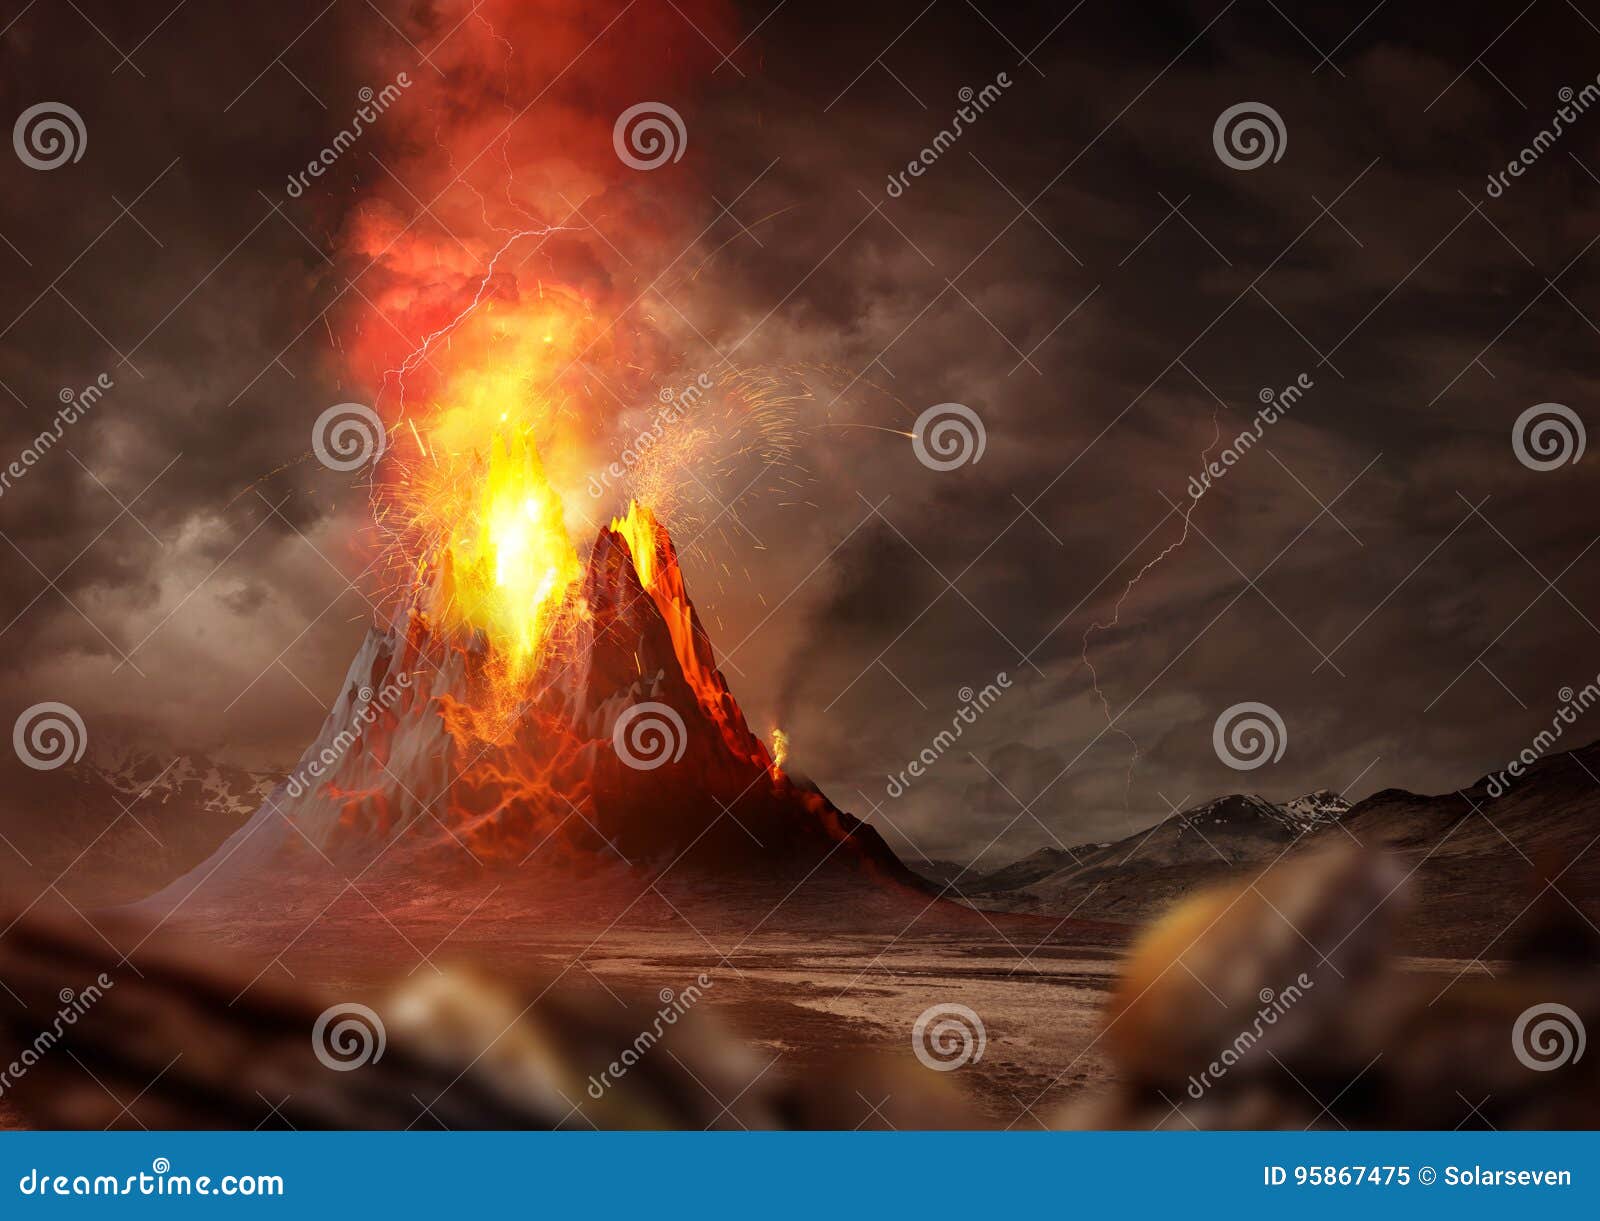 massive volcano eruption